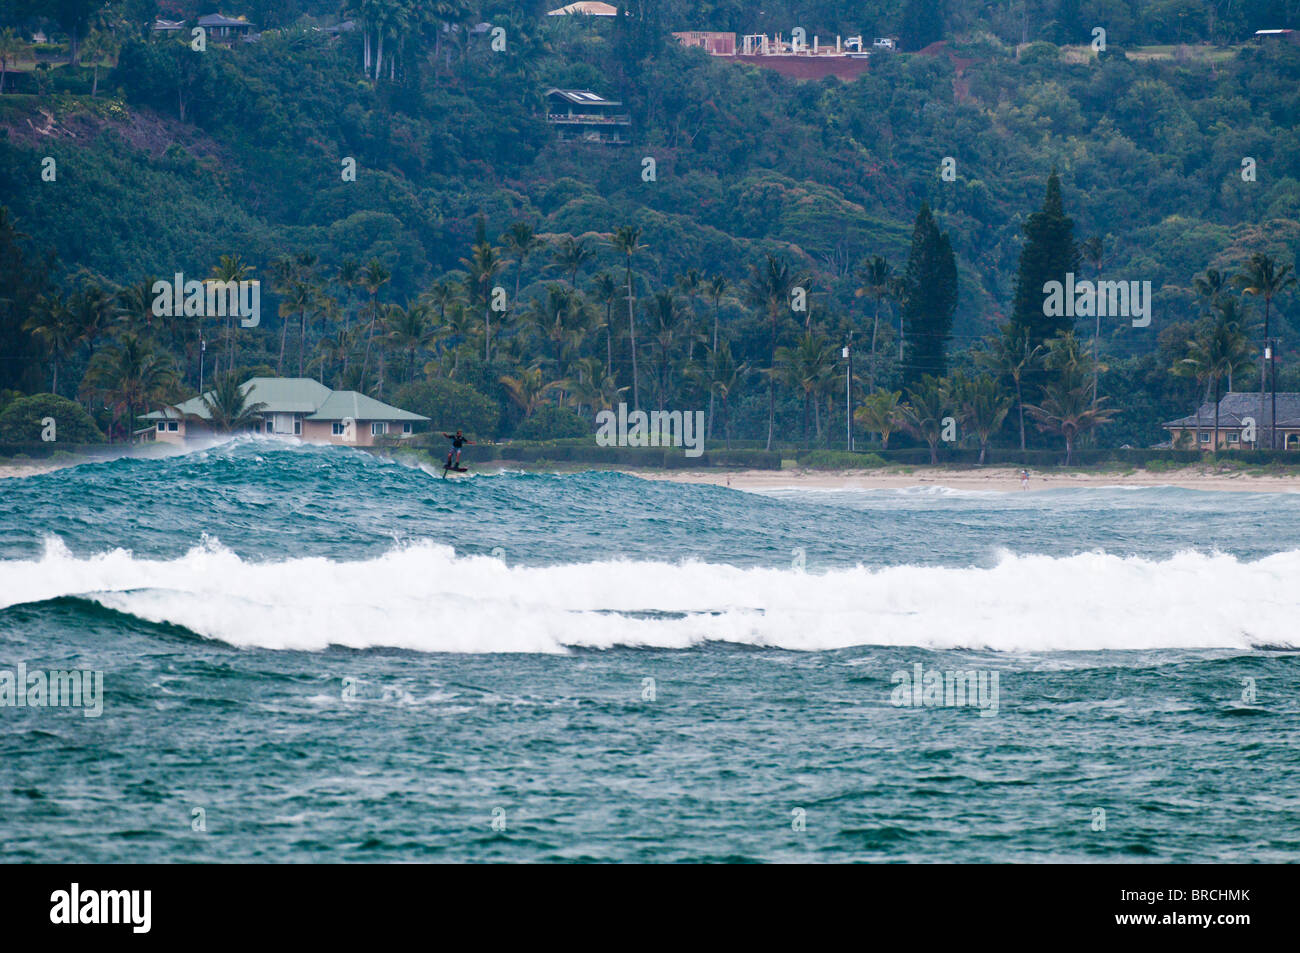 Laird Hamilton foil surfing in Hanalei Bay, Kauai, Hawaii Stock Photo